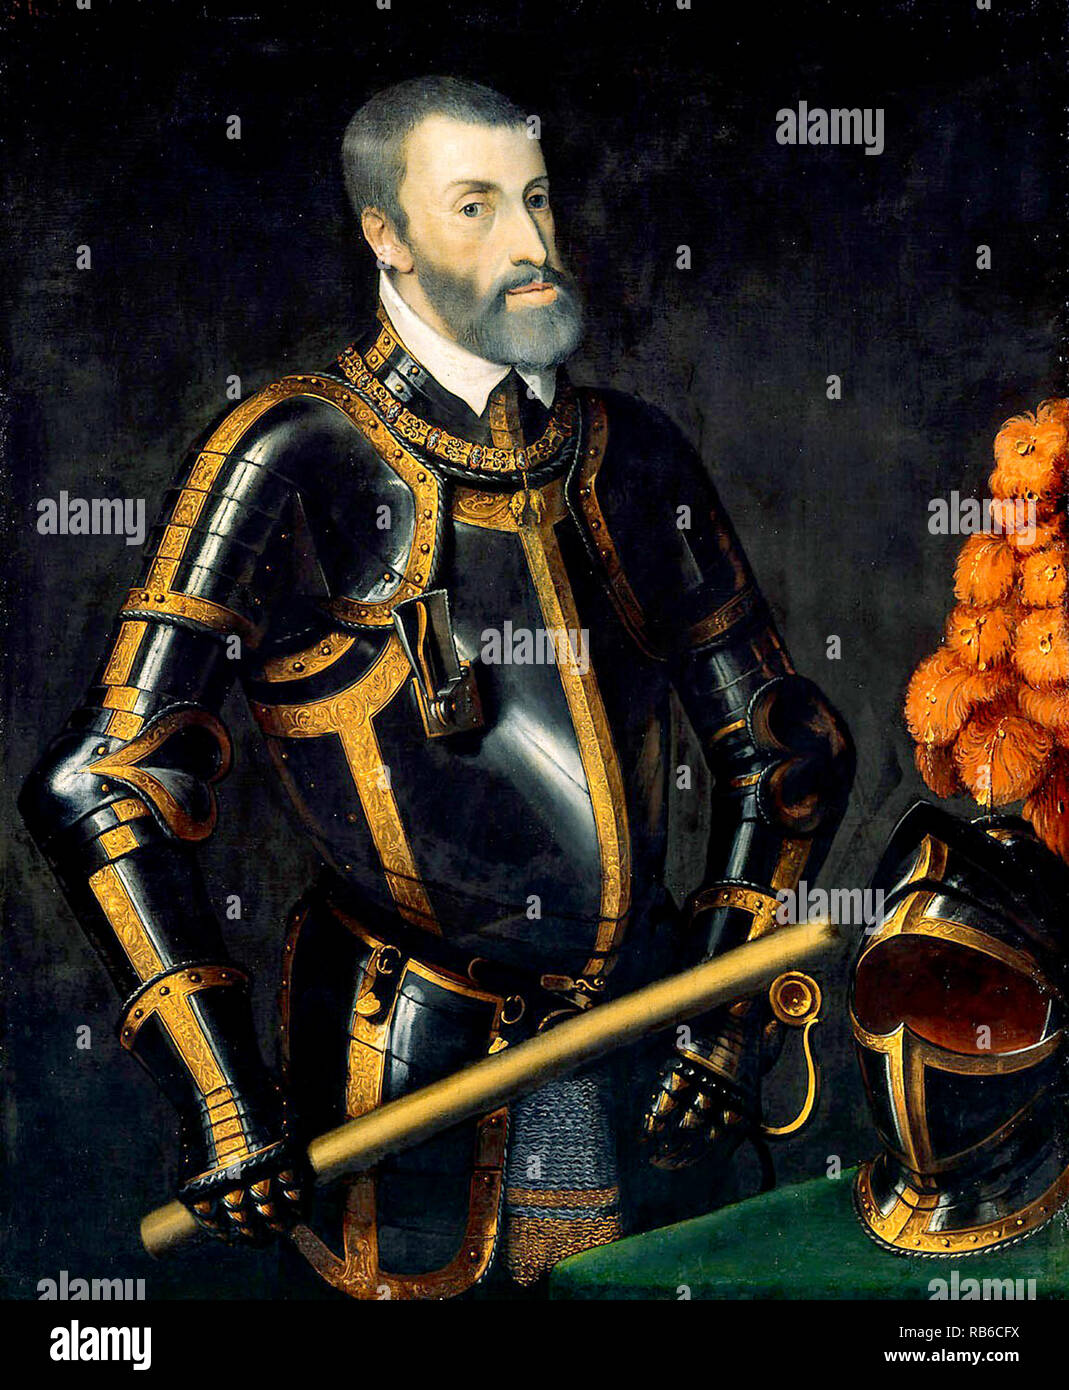 Karl V (Don Carlos I d'Espagne), souverain de l'Empire romain Saint Charles V (1500 - 1558) chef de l'Empire romain à partir de 1519 et l'Empire espagnol (comme Charles I d'Espagne) à partir de 1516 Banque D'Images